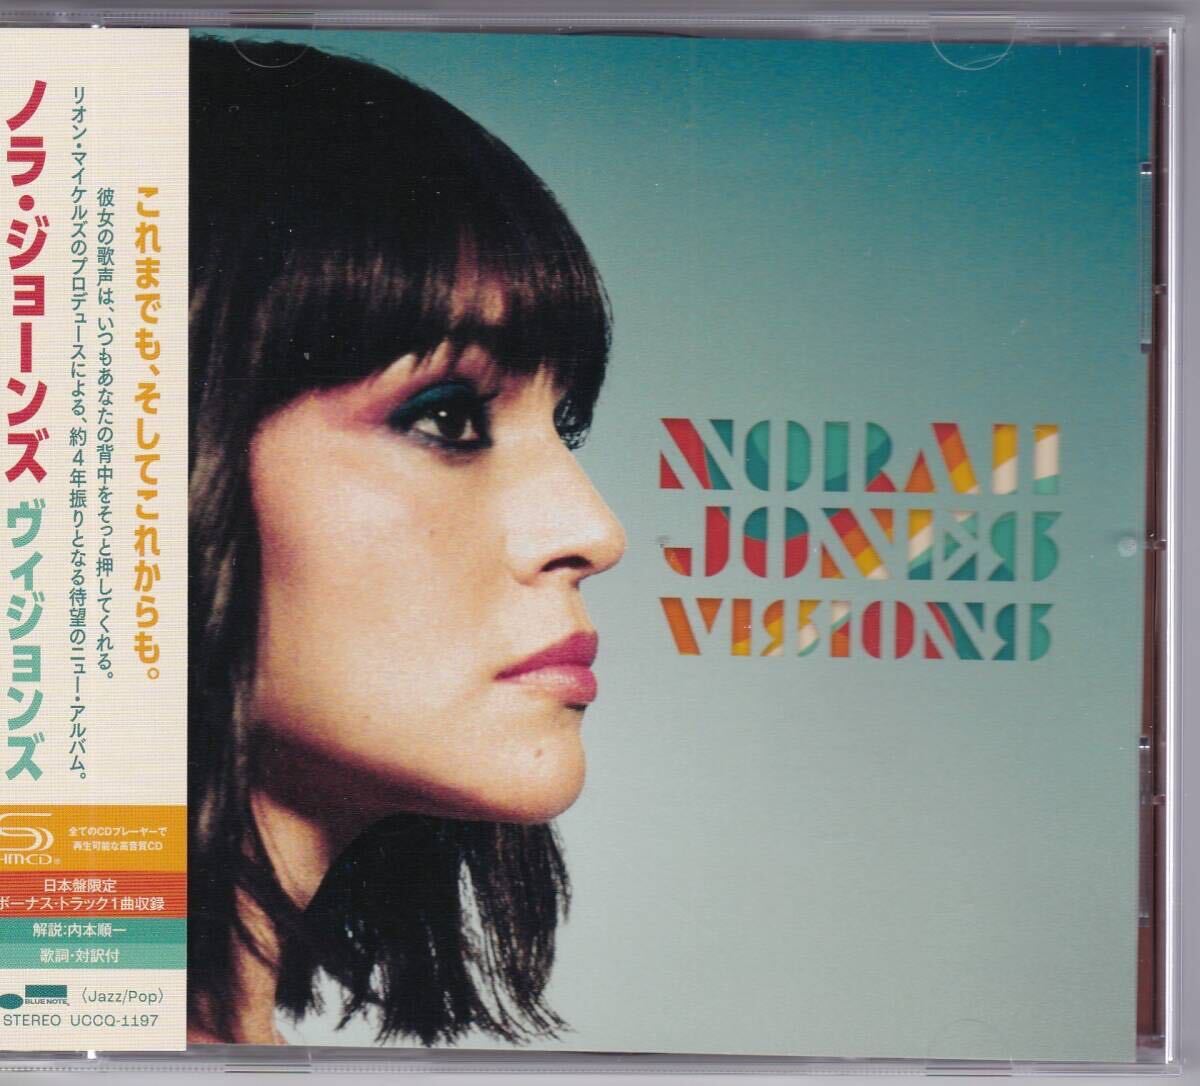  NORAH JONES VISIONS ノラ・ジョーンズ ヴィジョンズ (通常盤)(SHM-CD) _画像1